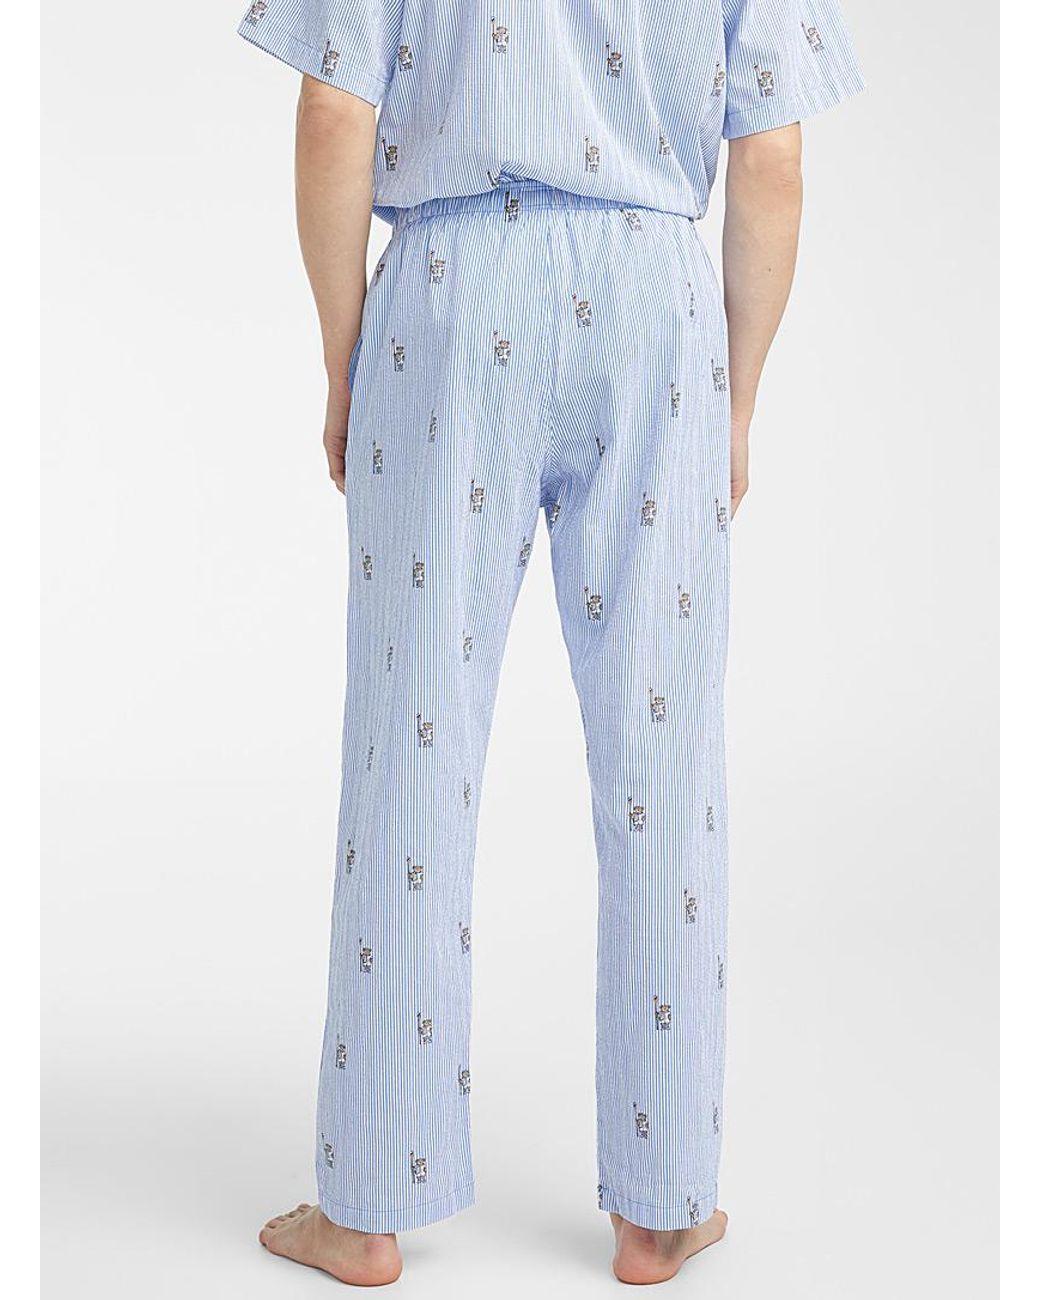 Briefly Stated Teddy Bear Sleep Pants Size Small S Lounge Pajama Bottoms   eBay